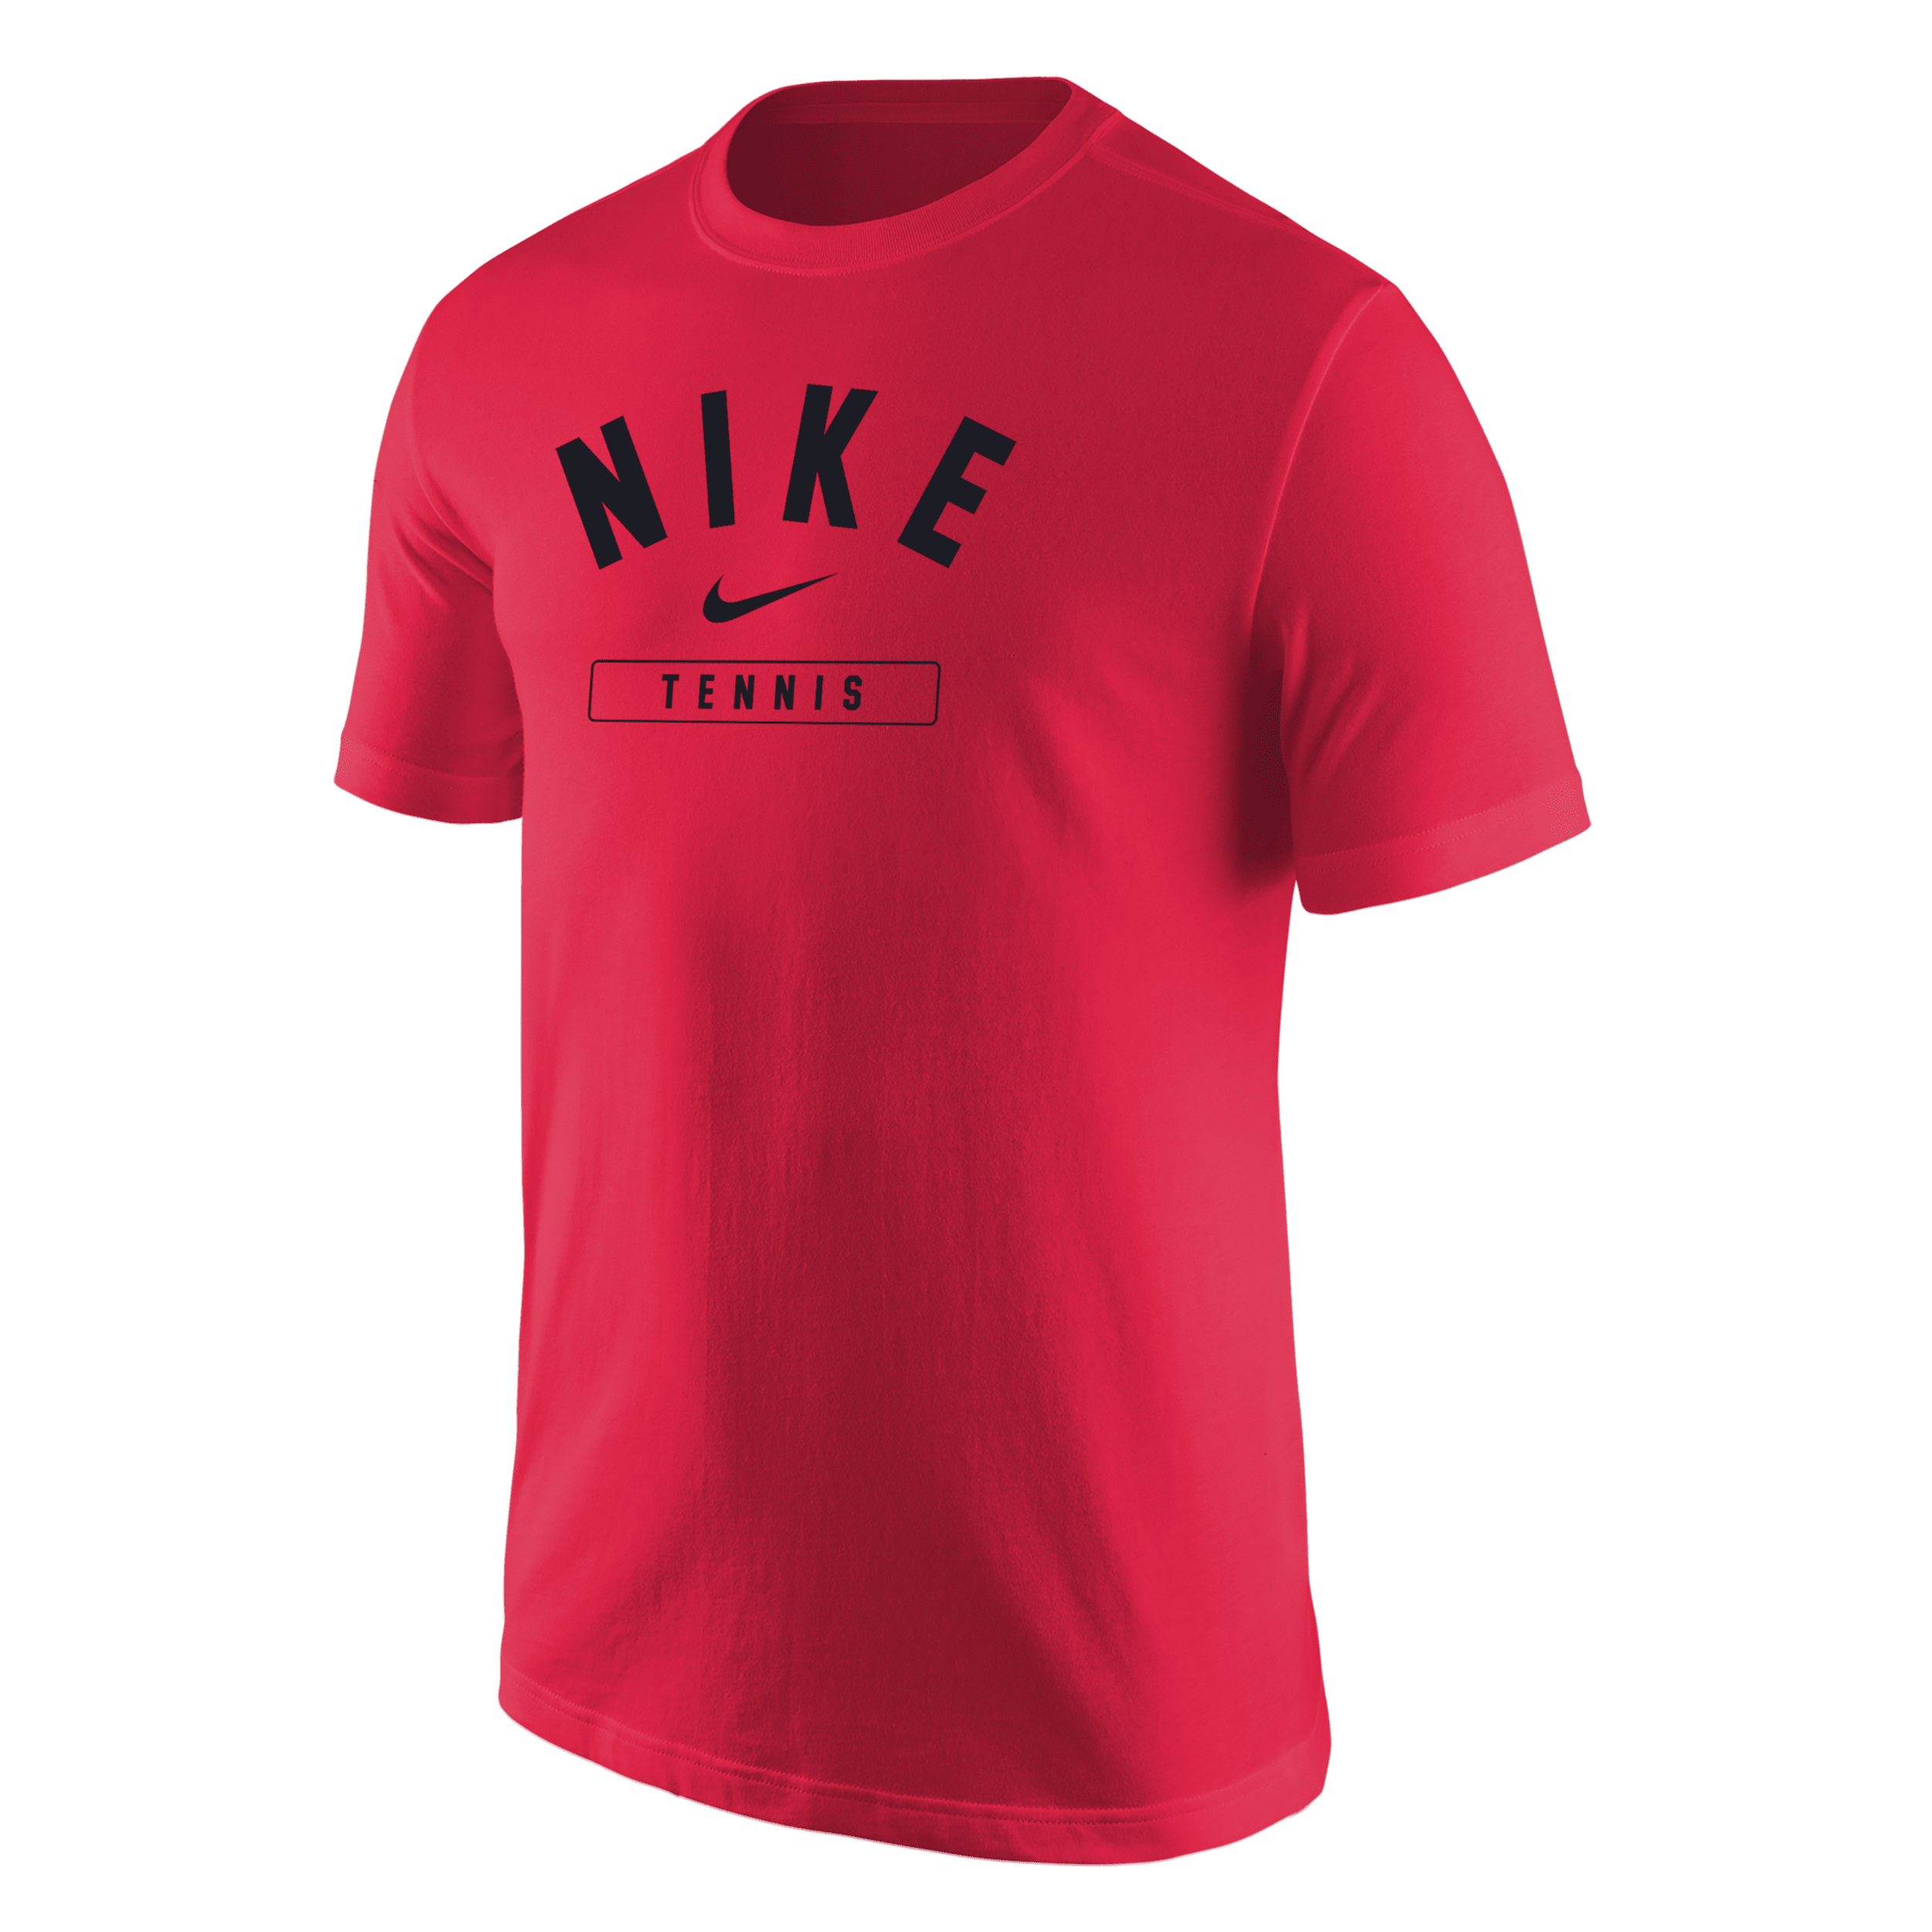 Nike Men's Tennis T-shirt In Red